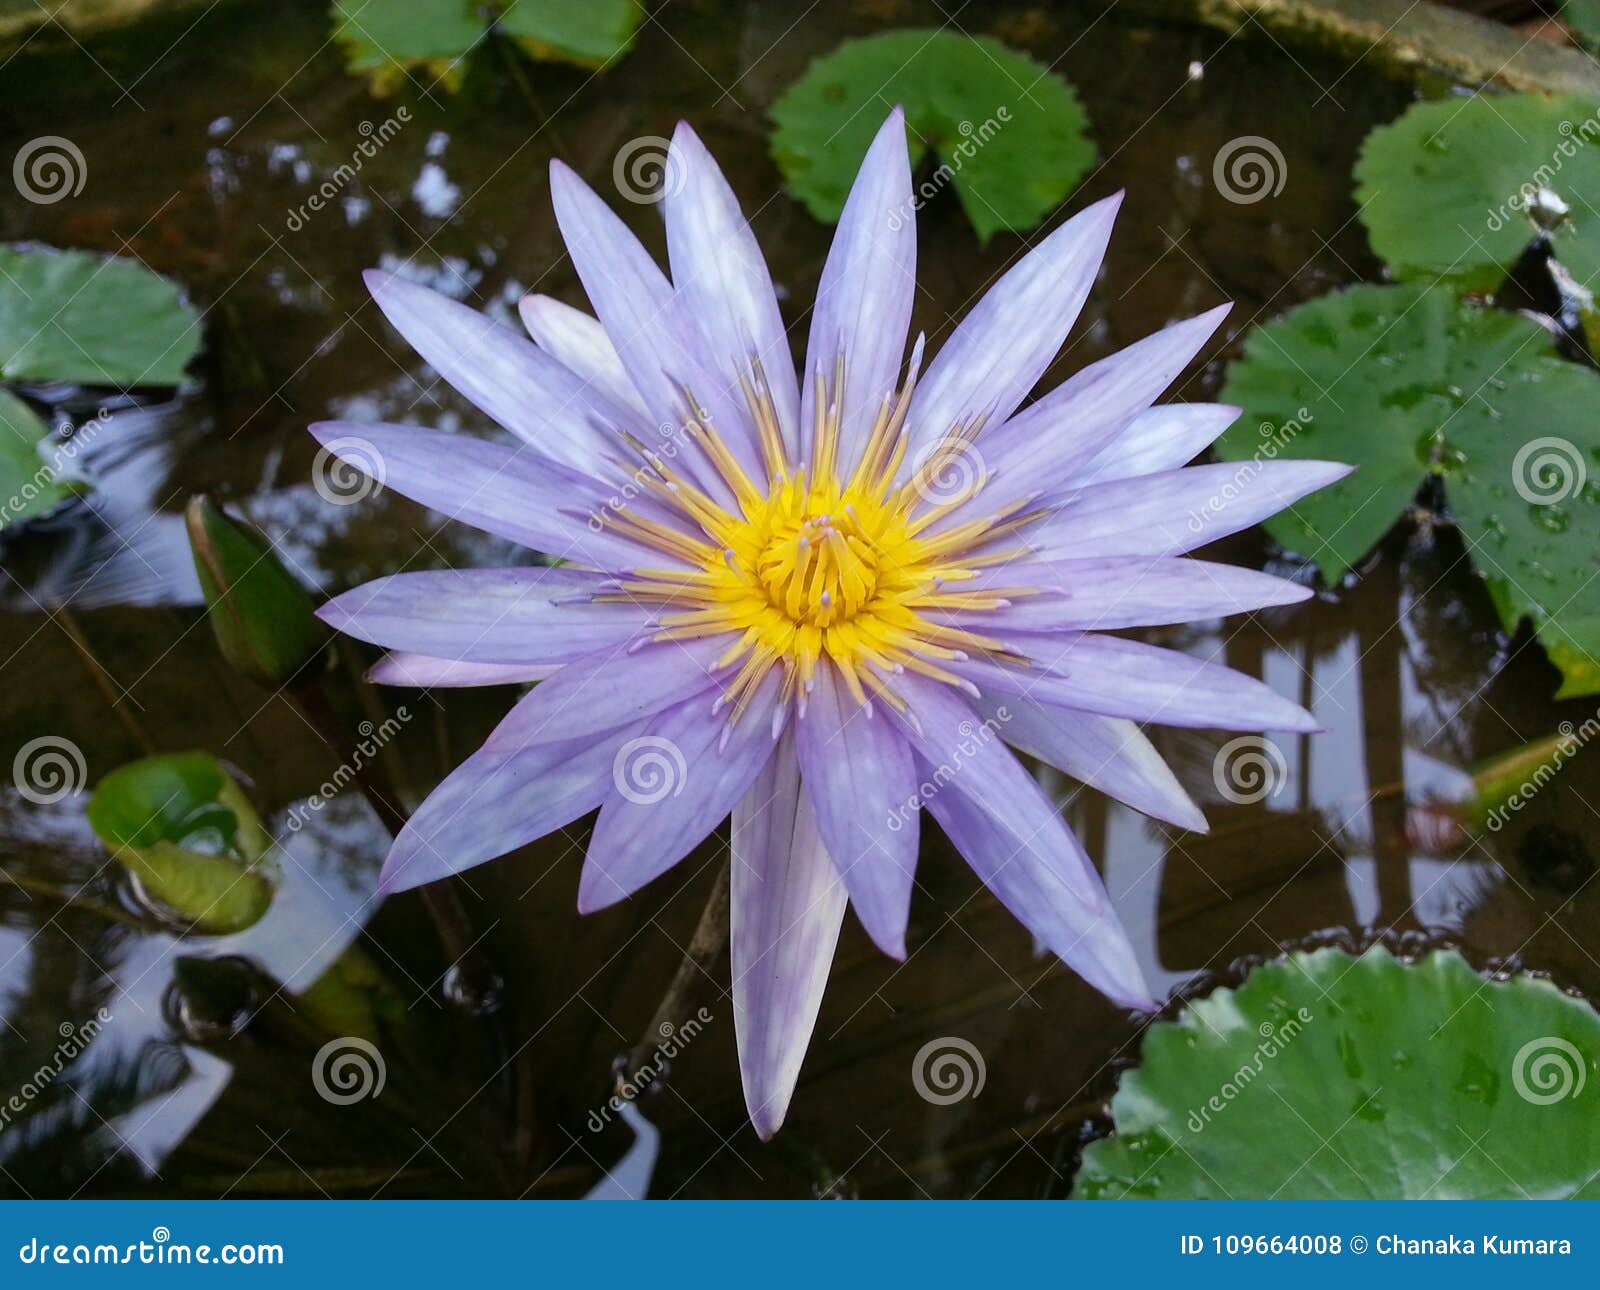 Natural Dark Purple Water Lily Flower Of Sri Lanka Stock Photo - Image ...